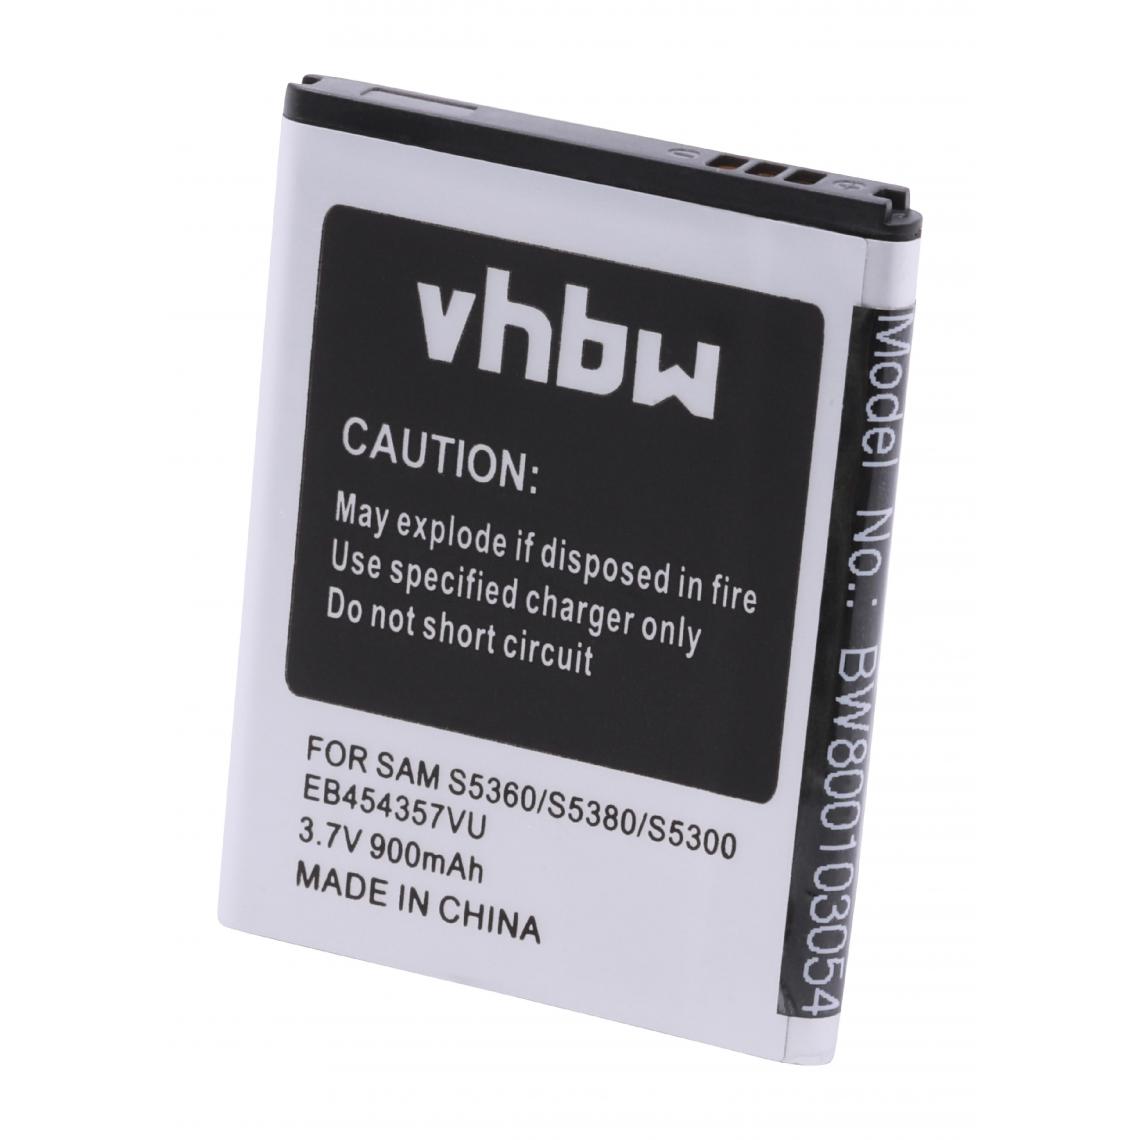 Vhbw - vhbw Batterie compatible avec Samsung Galaxy Young Y, Y Pro smartphone (1000mAh, 3,7V, Li-ion) - Batterie téléphone